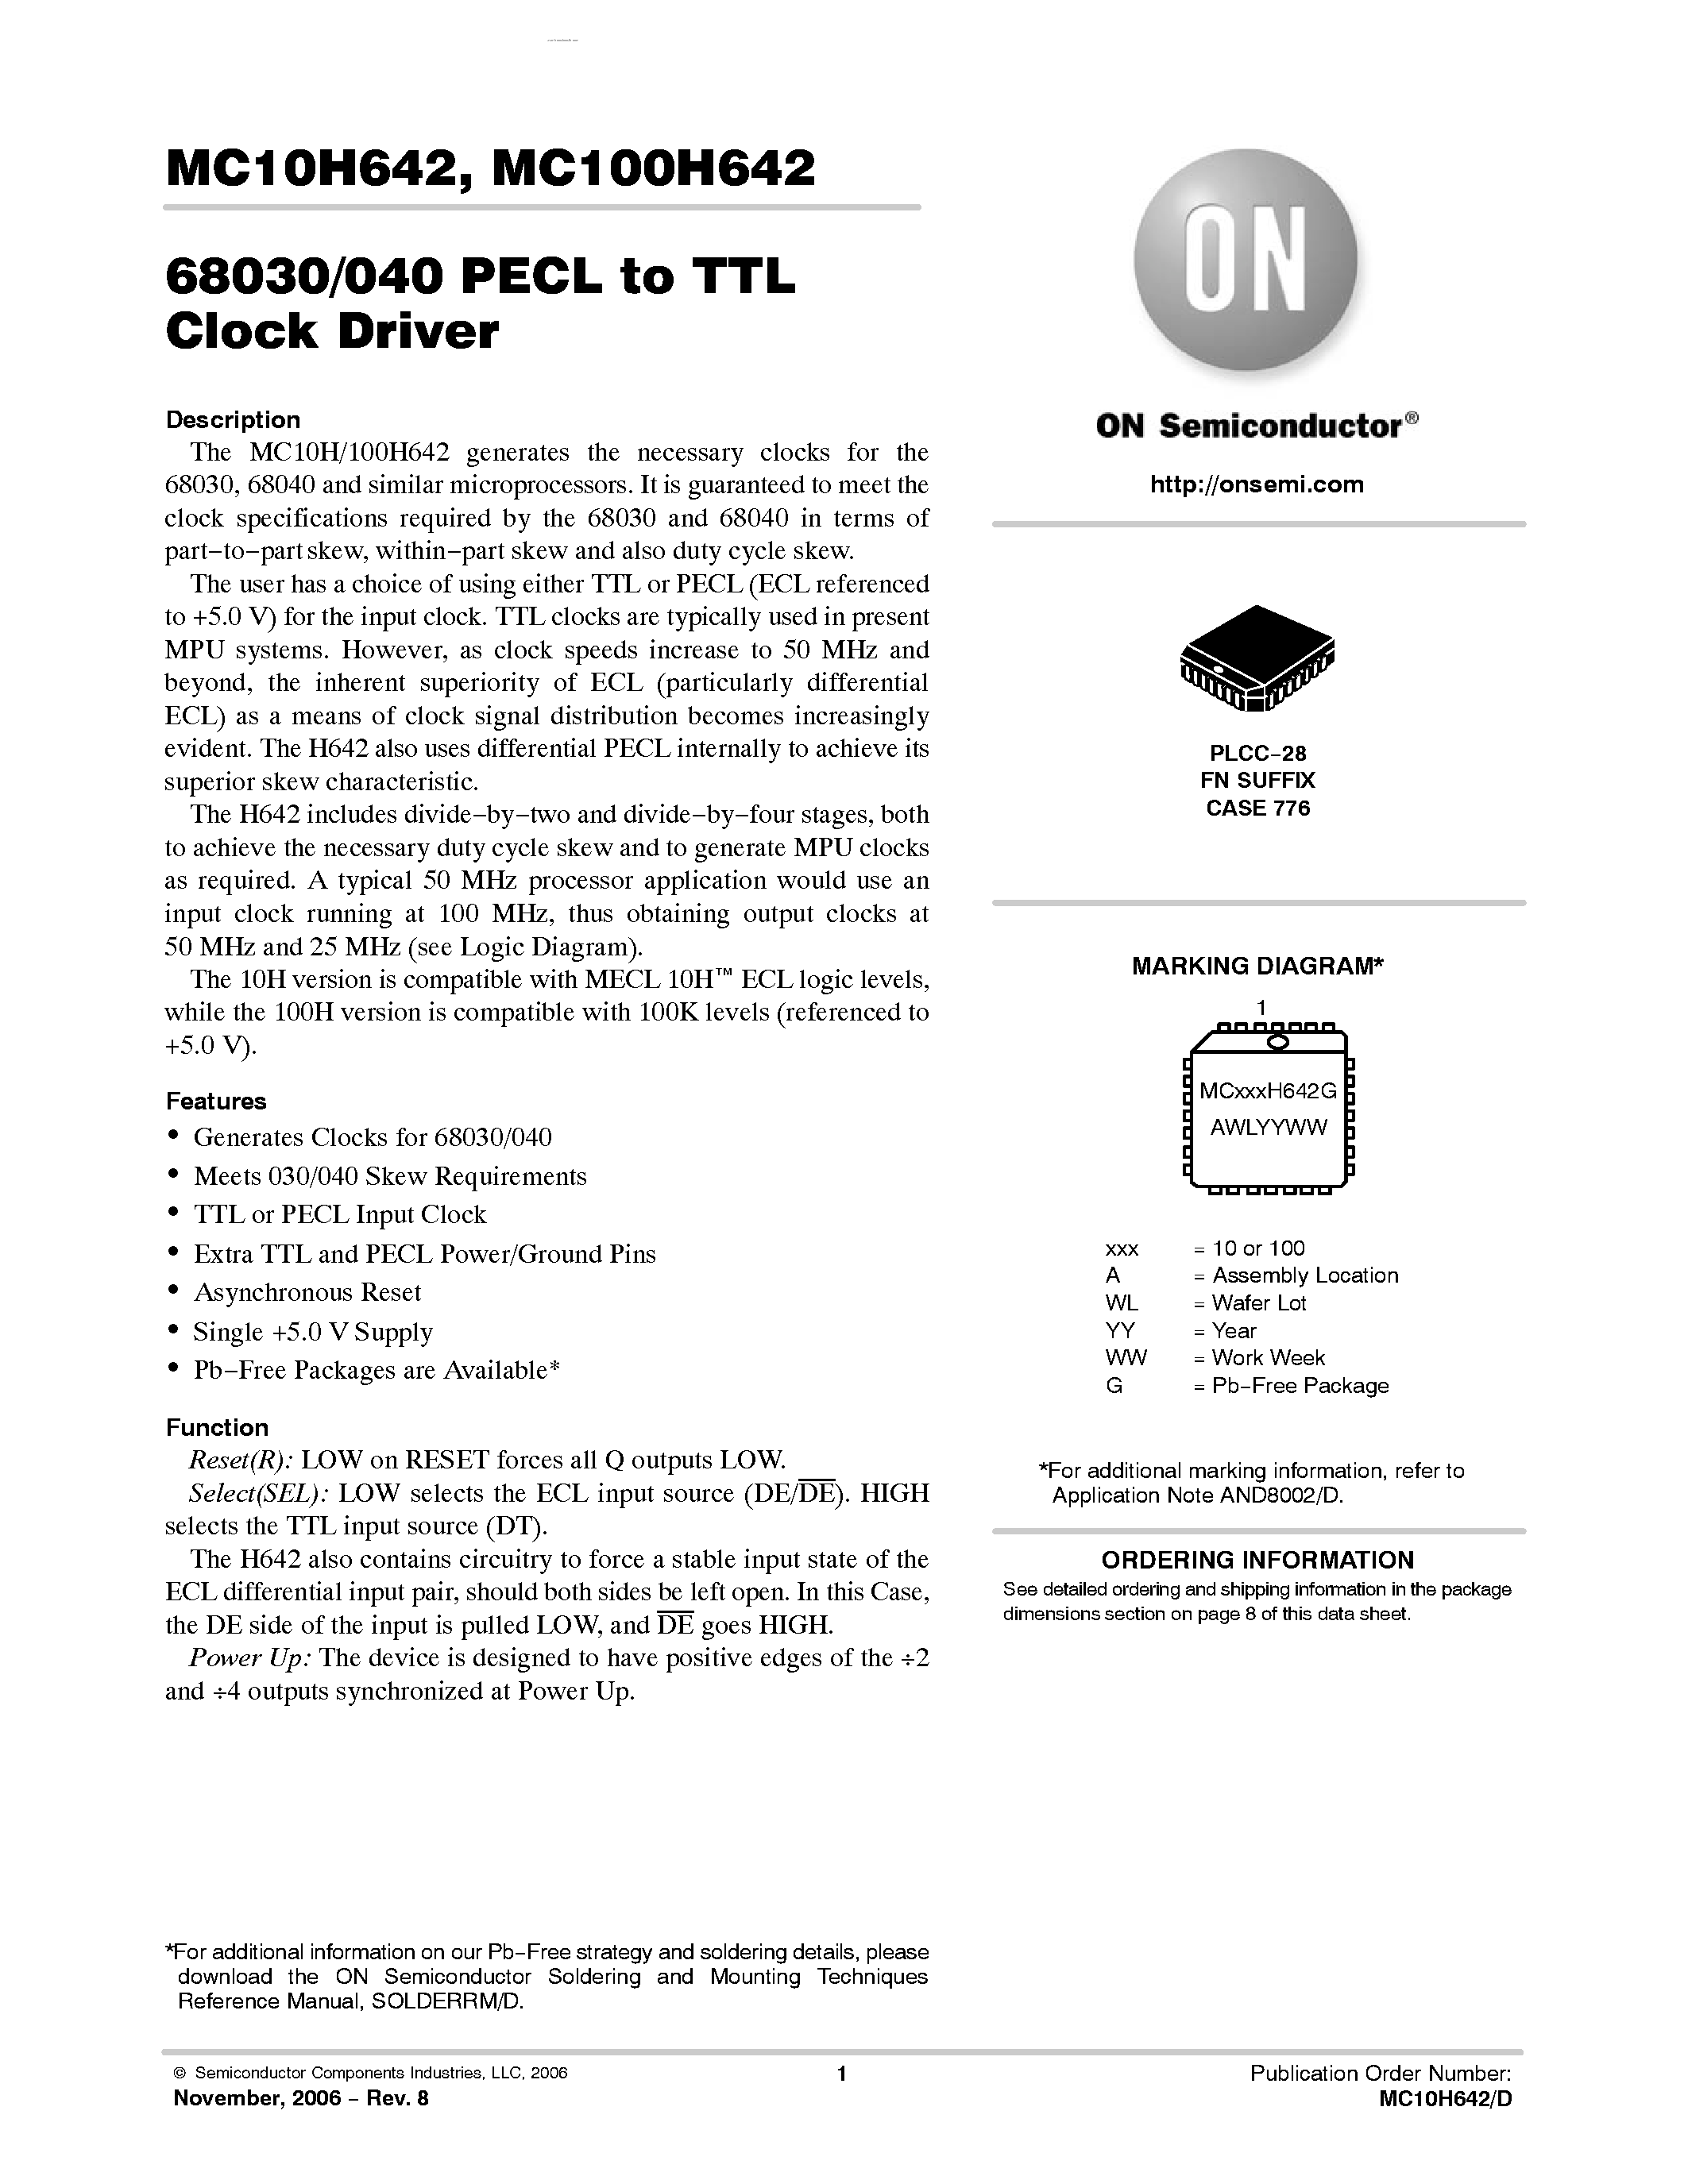 Datasheet MC10H642 - 68030/040 PECL-TTL CLOCK DRIVER page 1